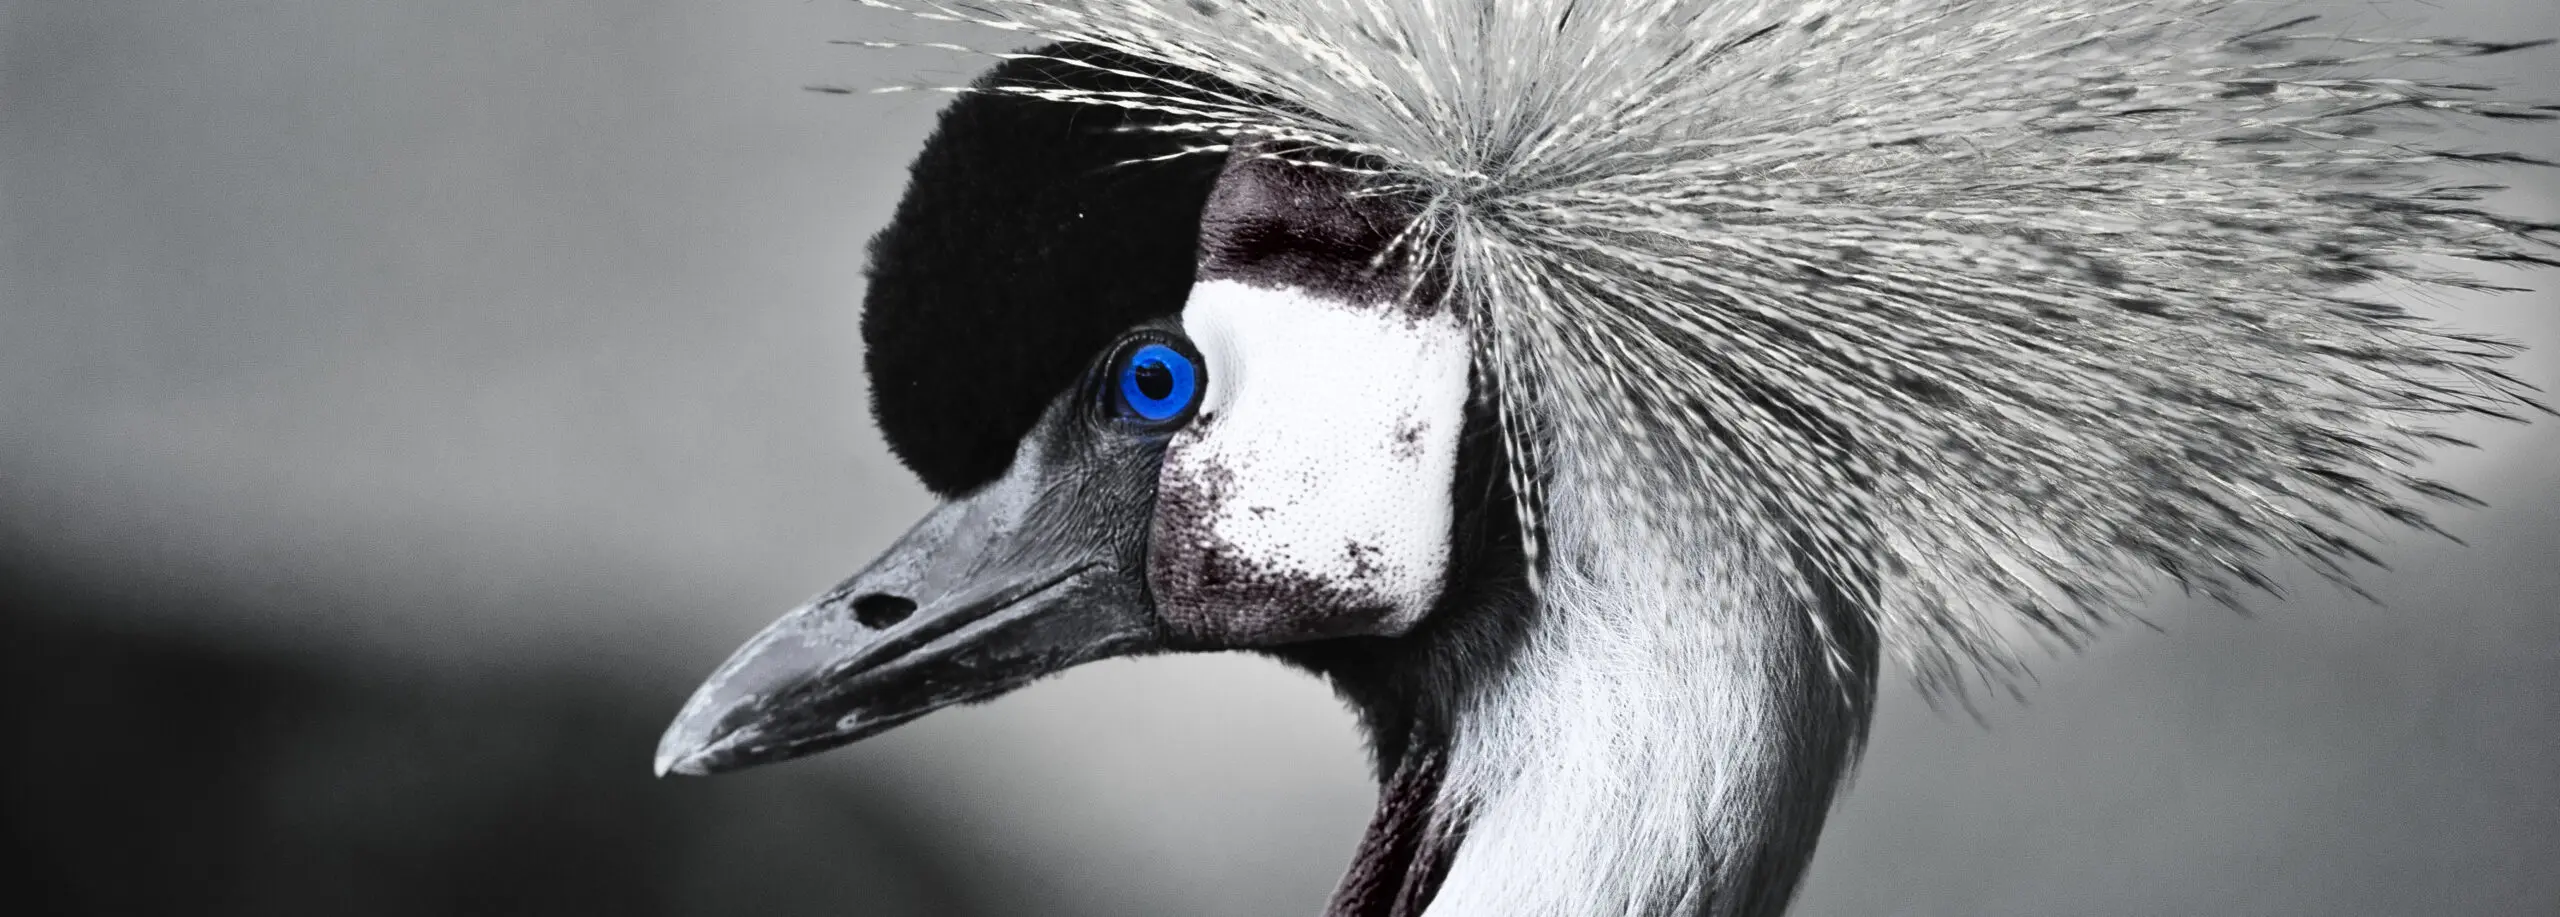 Wandbild (350) Blue Eye präsentiert: Tiere,Vögel